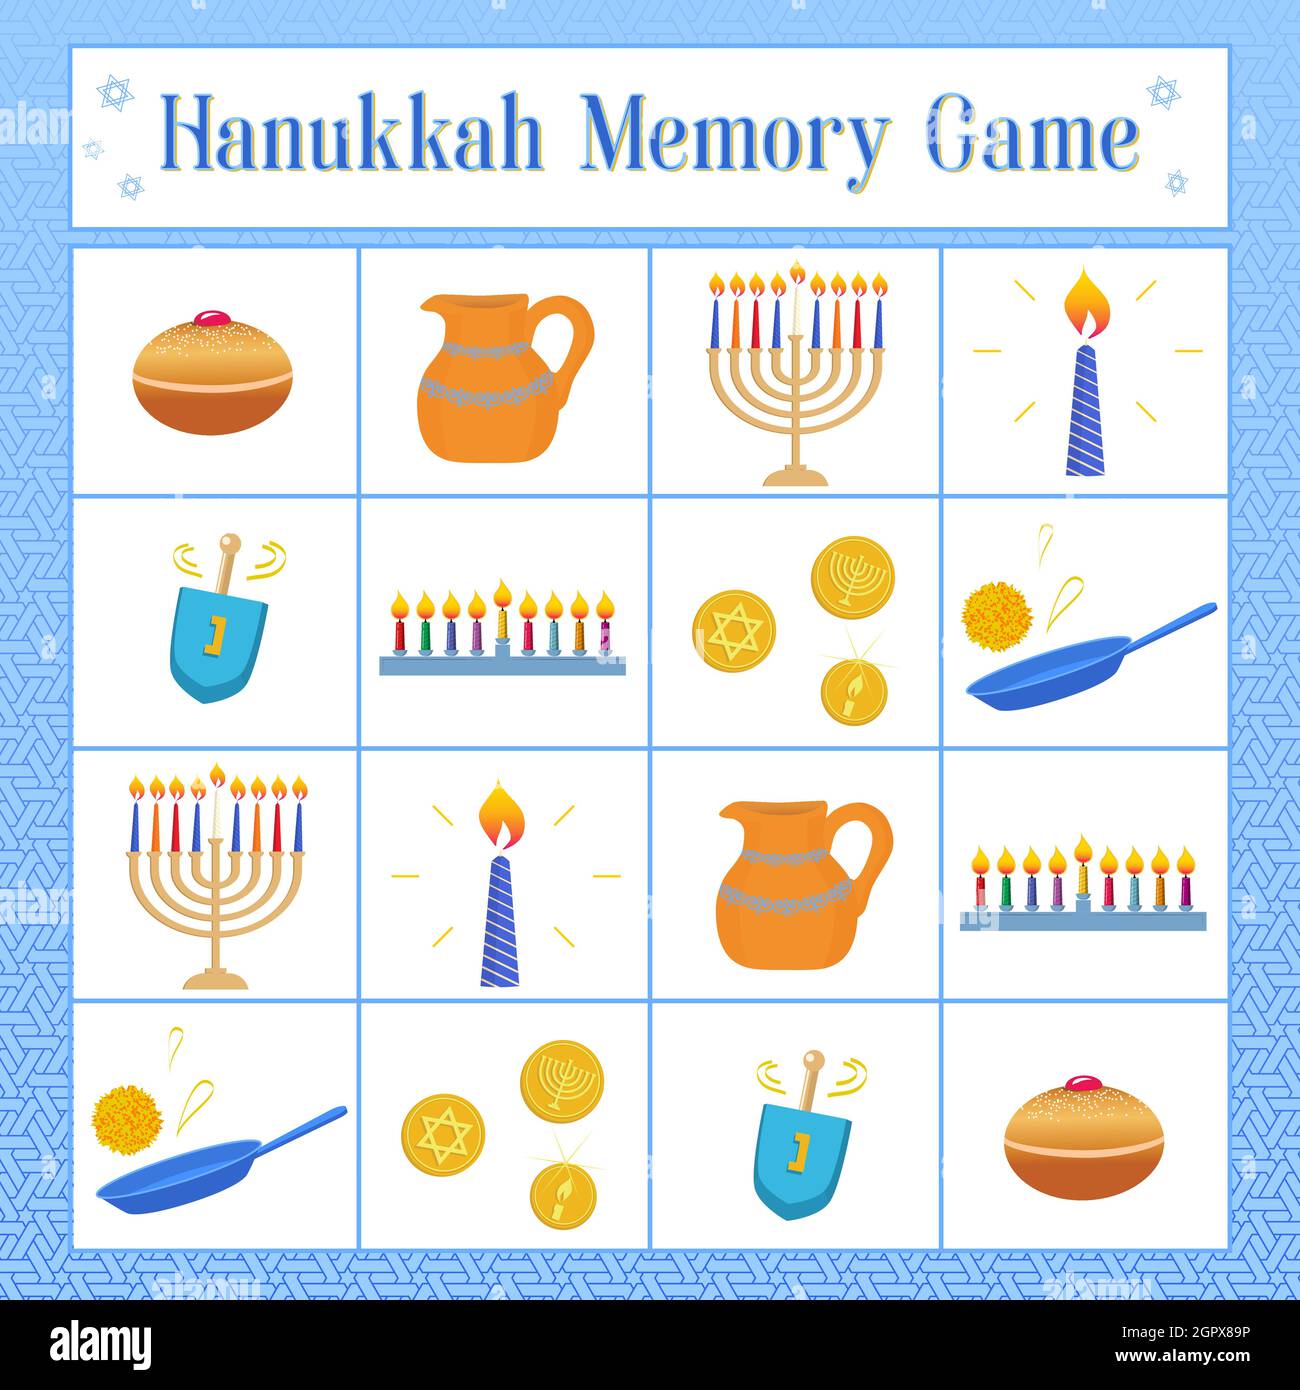 Activities for children related to Hanukkah. Memory Game with symbols of Jewish holiday Hanukkah, dreidel, donuts, oil jar, coins, latkes. Vector illu Stock Vector